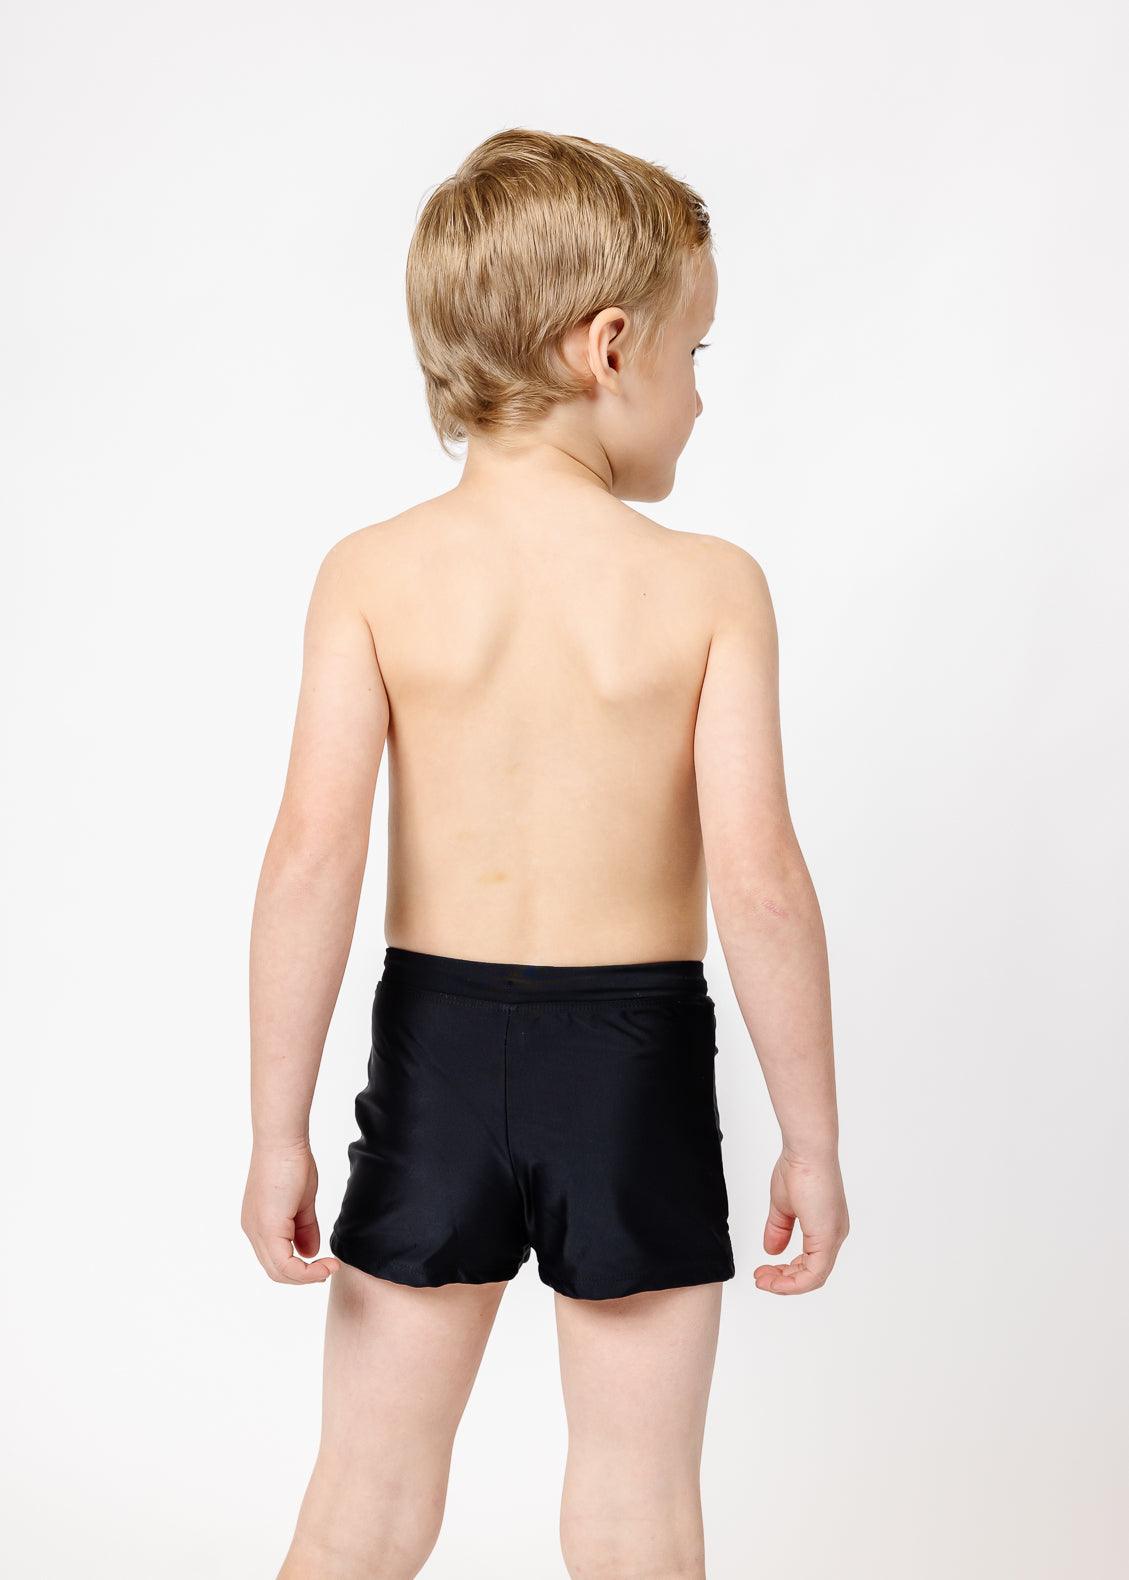 Boys Swimsuit - Shorts  - Black